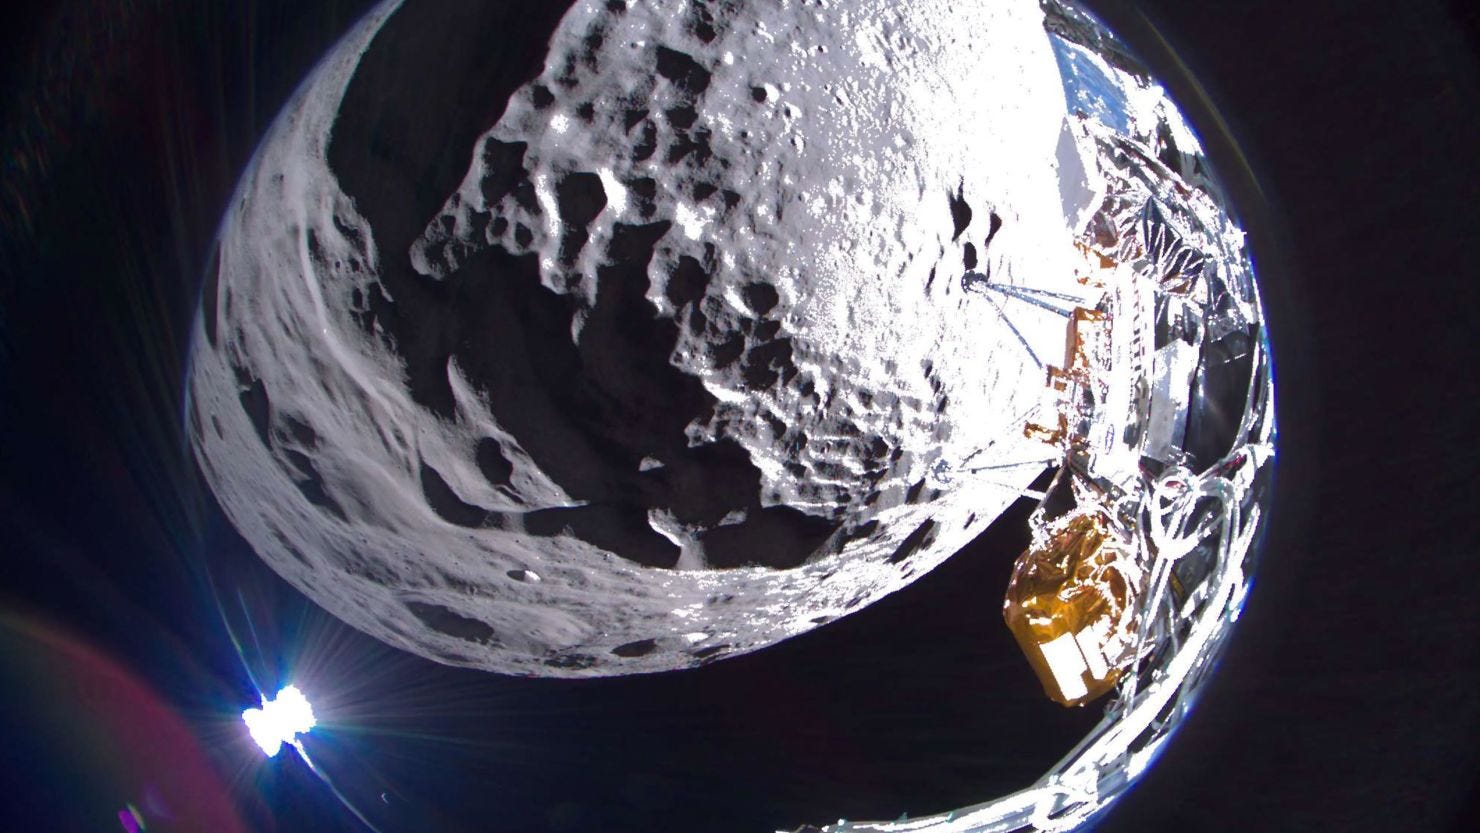 Odysseus Moon Lander: Dramatic Sideways Landing Resilience in the Face